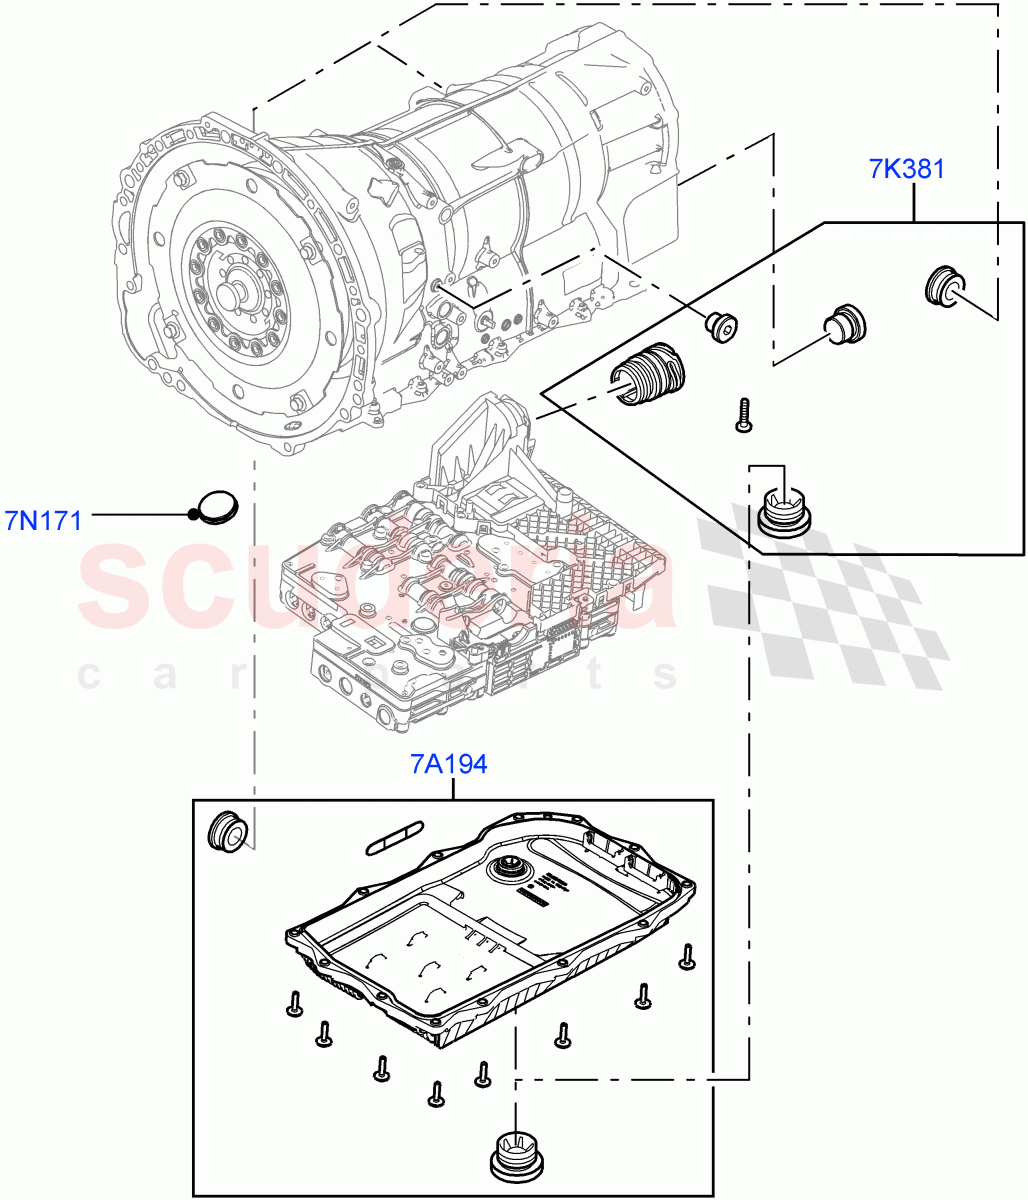 Transmission External Components(5.0L P AJ133 DOHC CDA S/C Enhanced,8 Speed Auto Trans ZF 8HP70 4WD)((V)FROMKA000001) of Land Rover Land Rover Range Rover Velar (2017+) [5.0 OHC SGDI SC V8 Petrol]